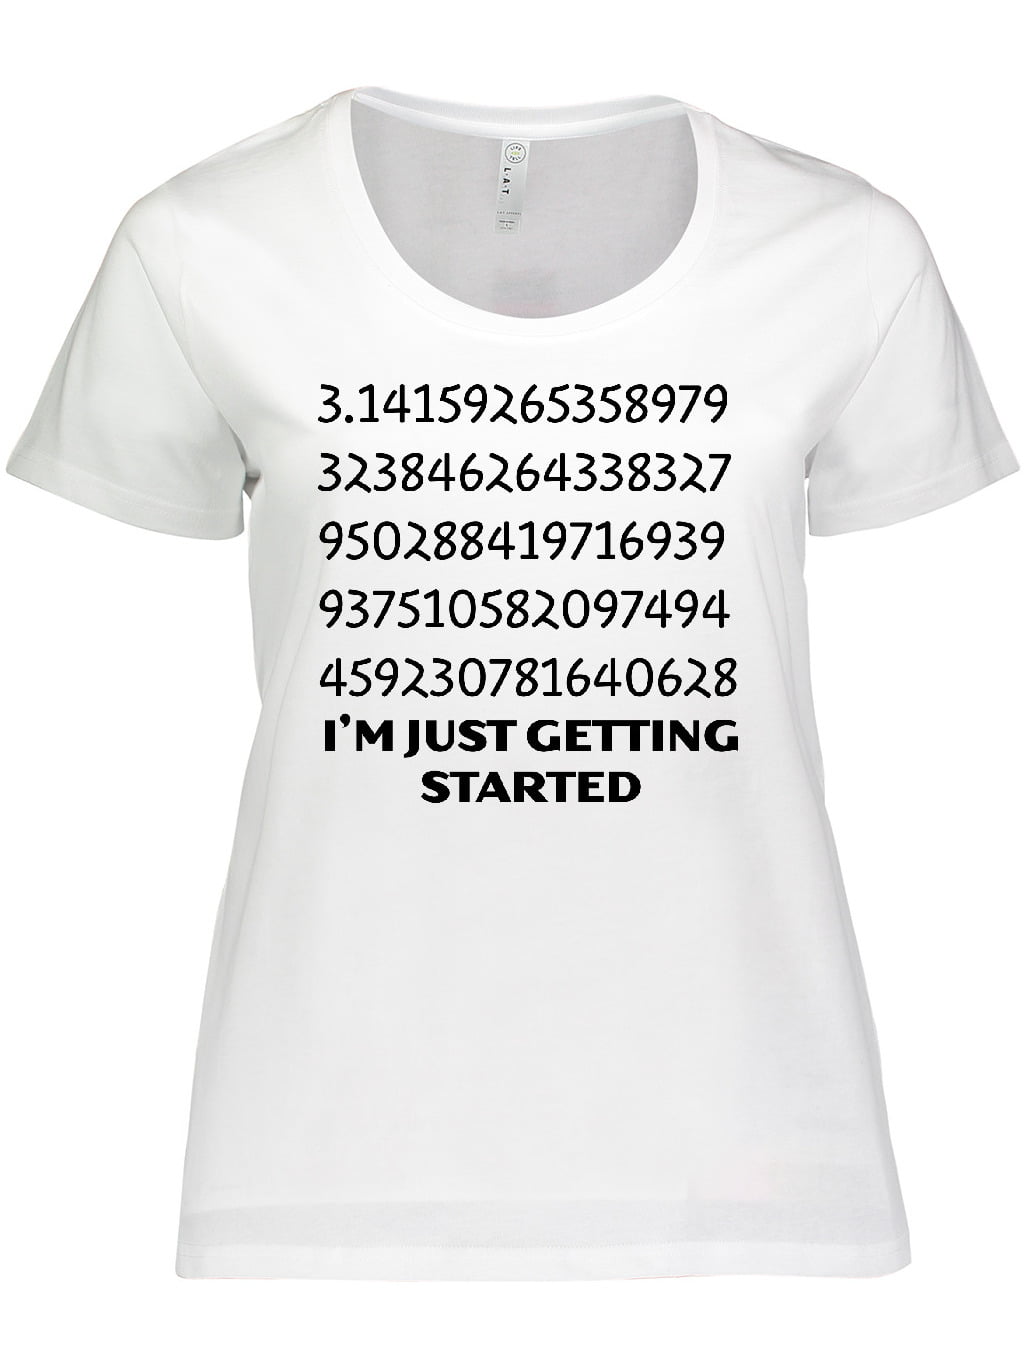 Salk Institute Print T-Shirt - Ready-to-Wear 1AAYX3